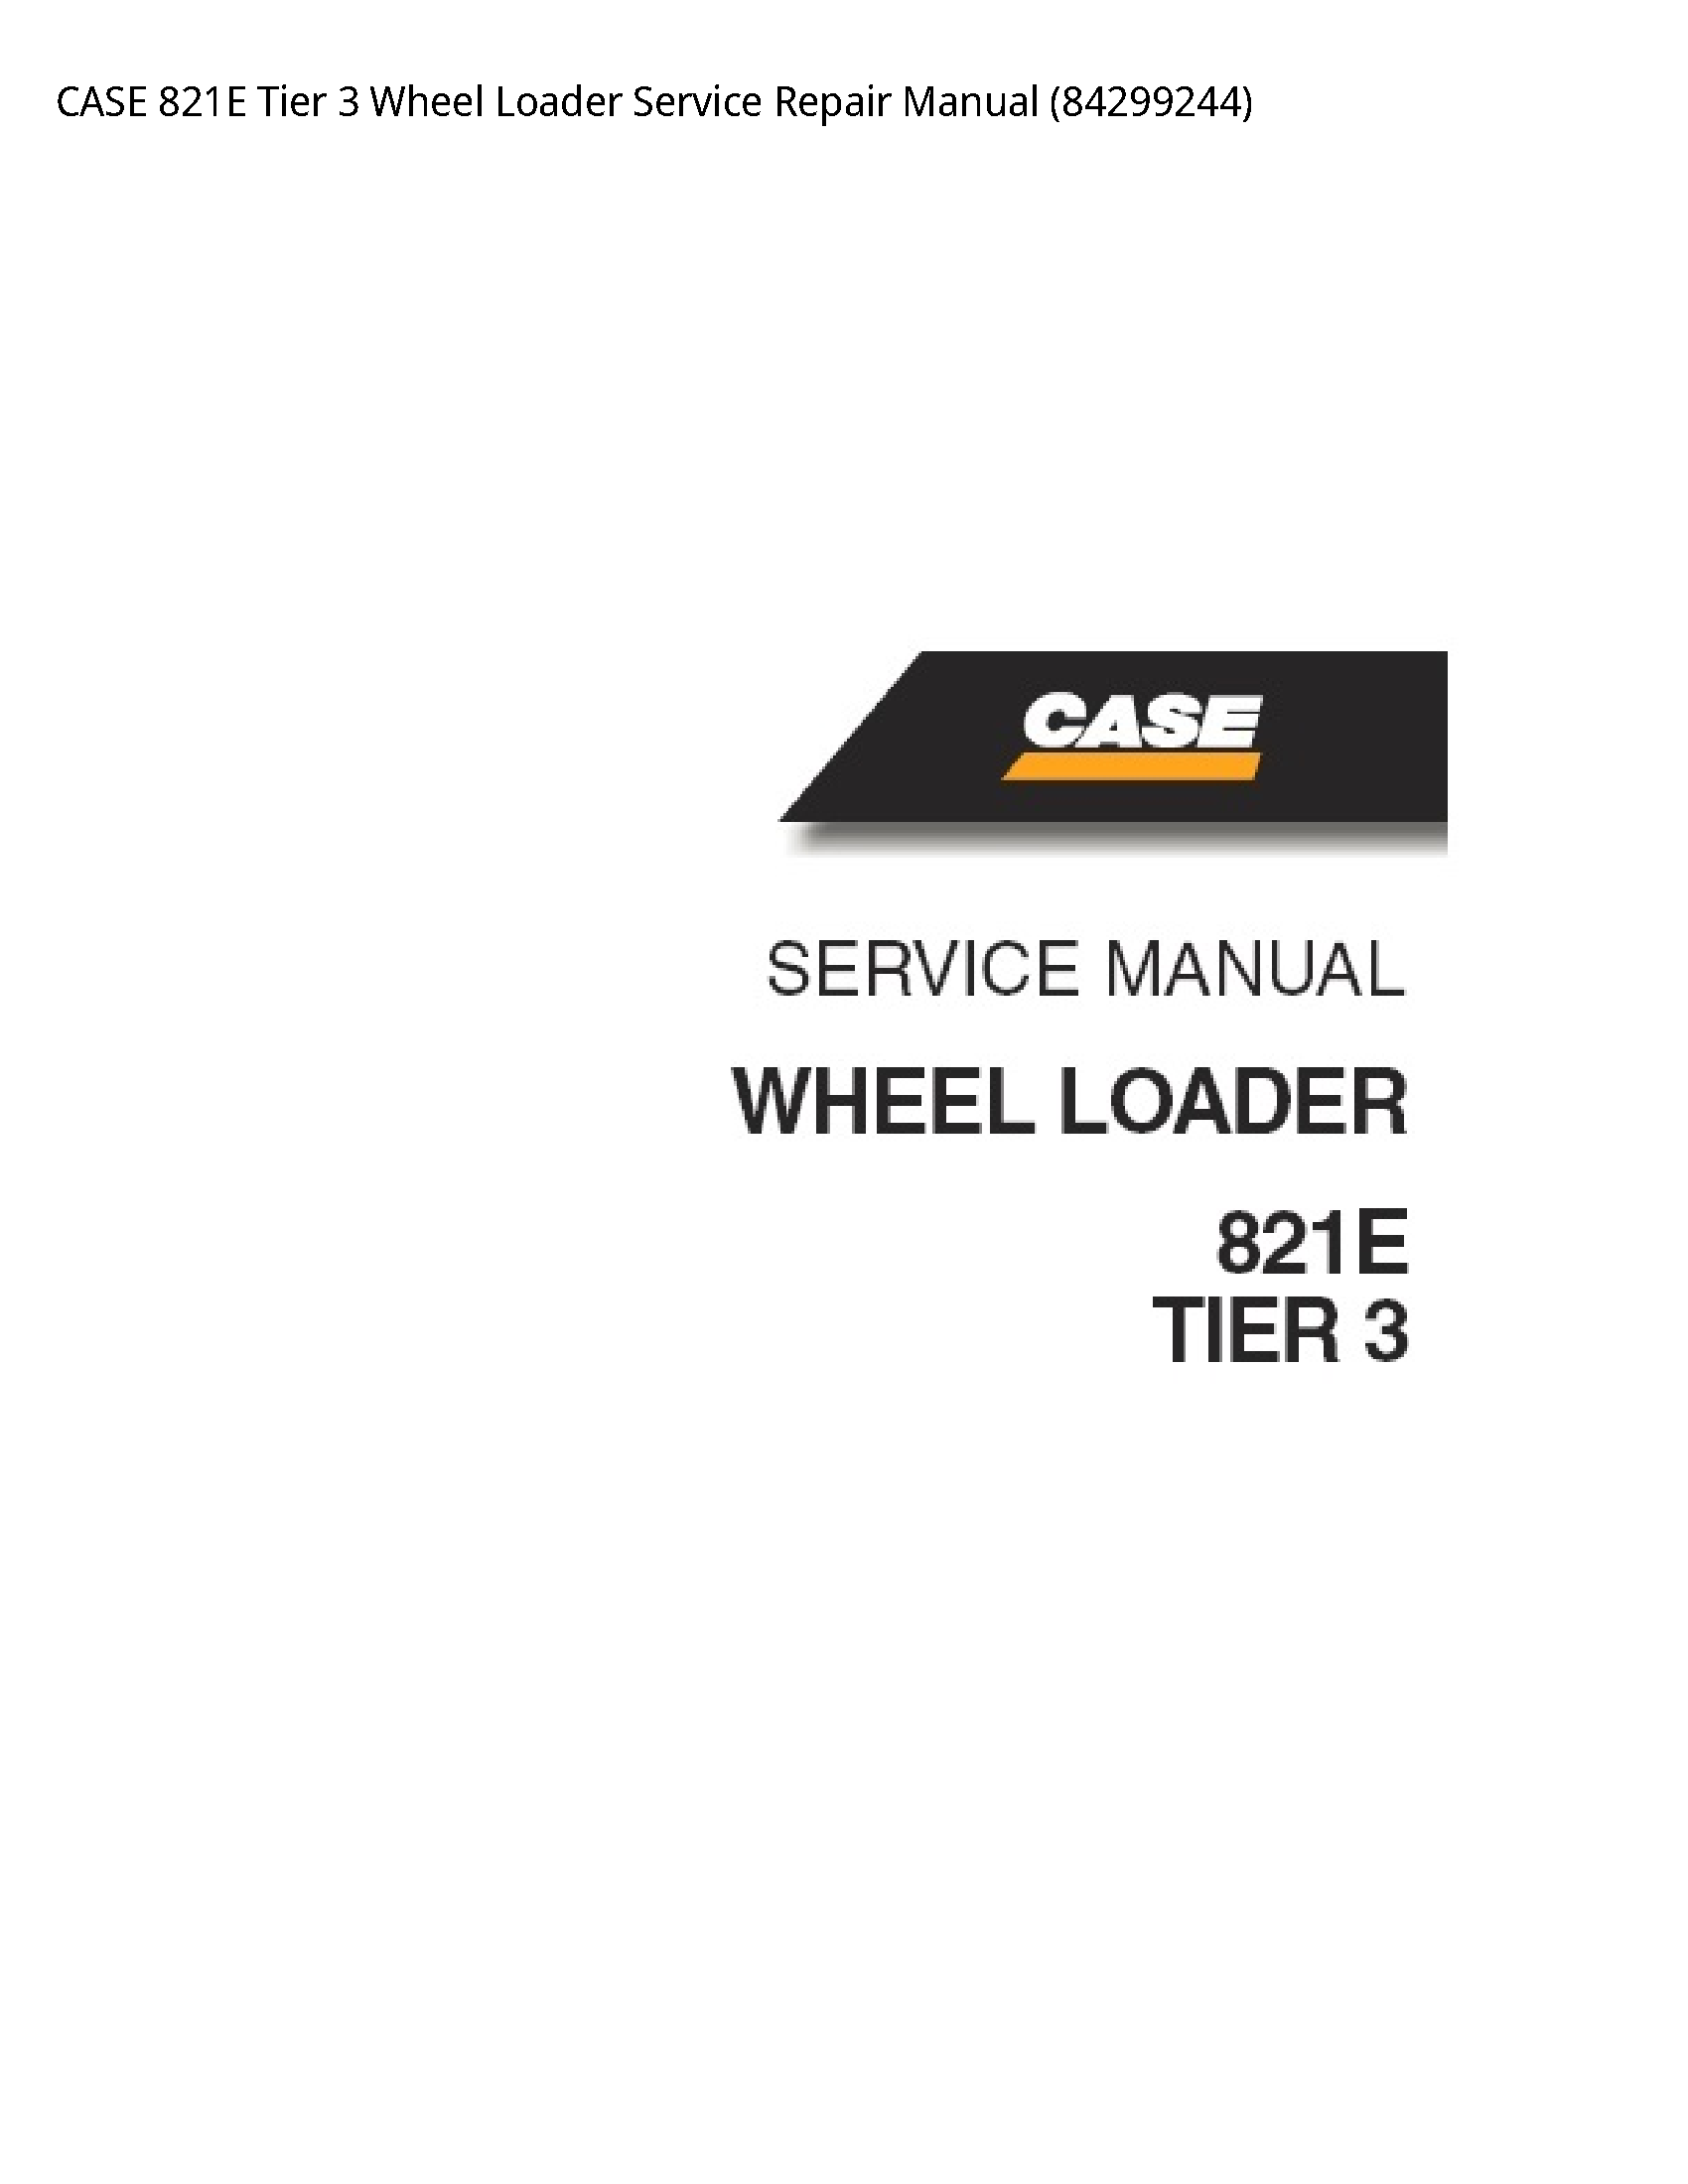 Case/Case IH 821E Tier Wheel Loader manual